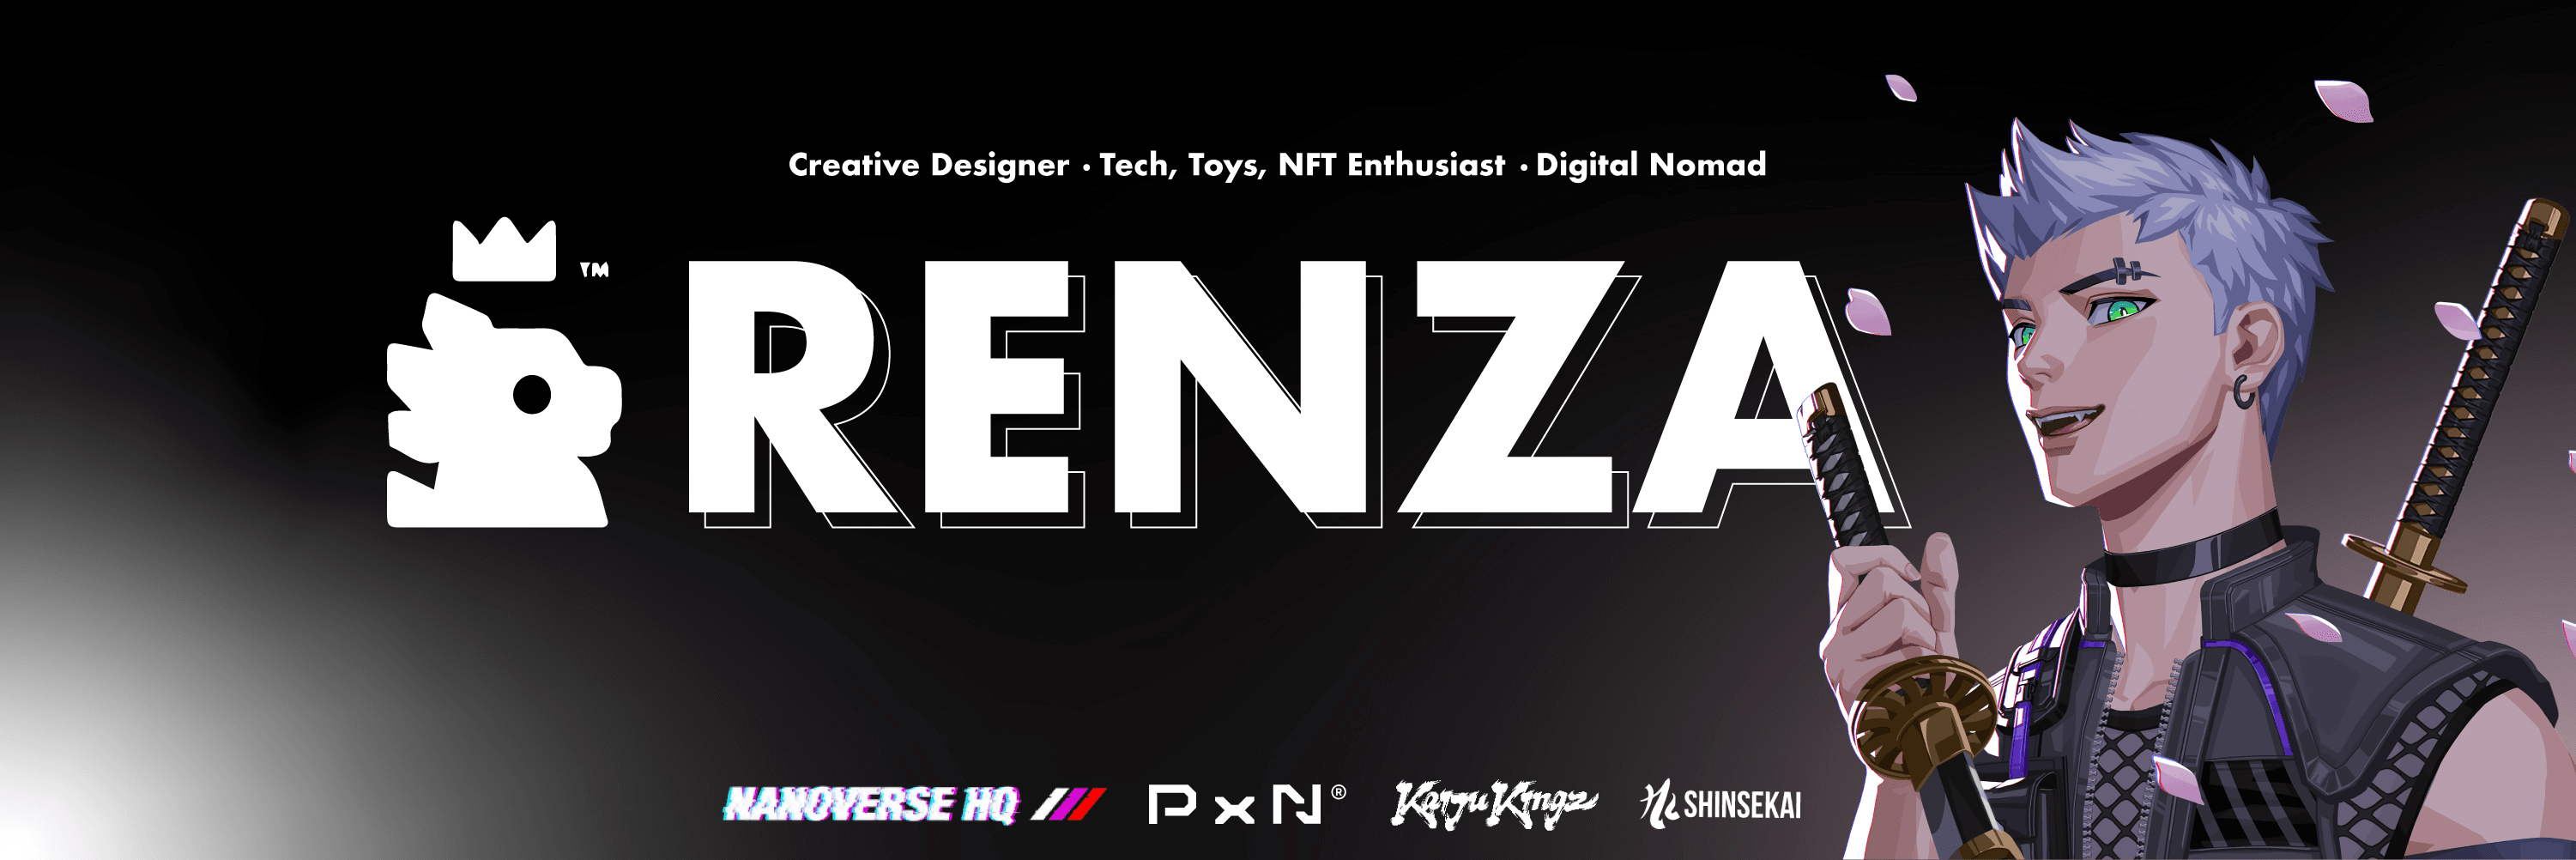 0xRenza banner